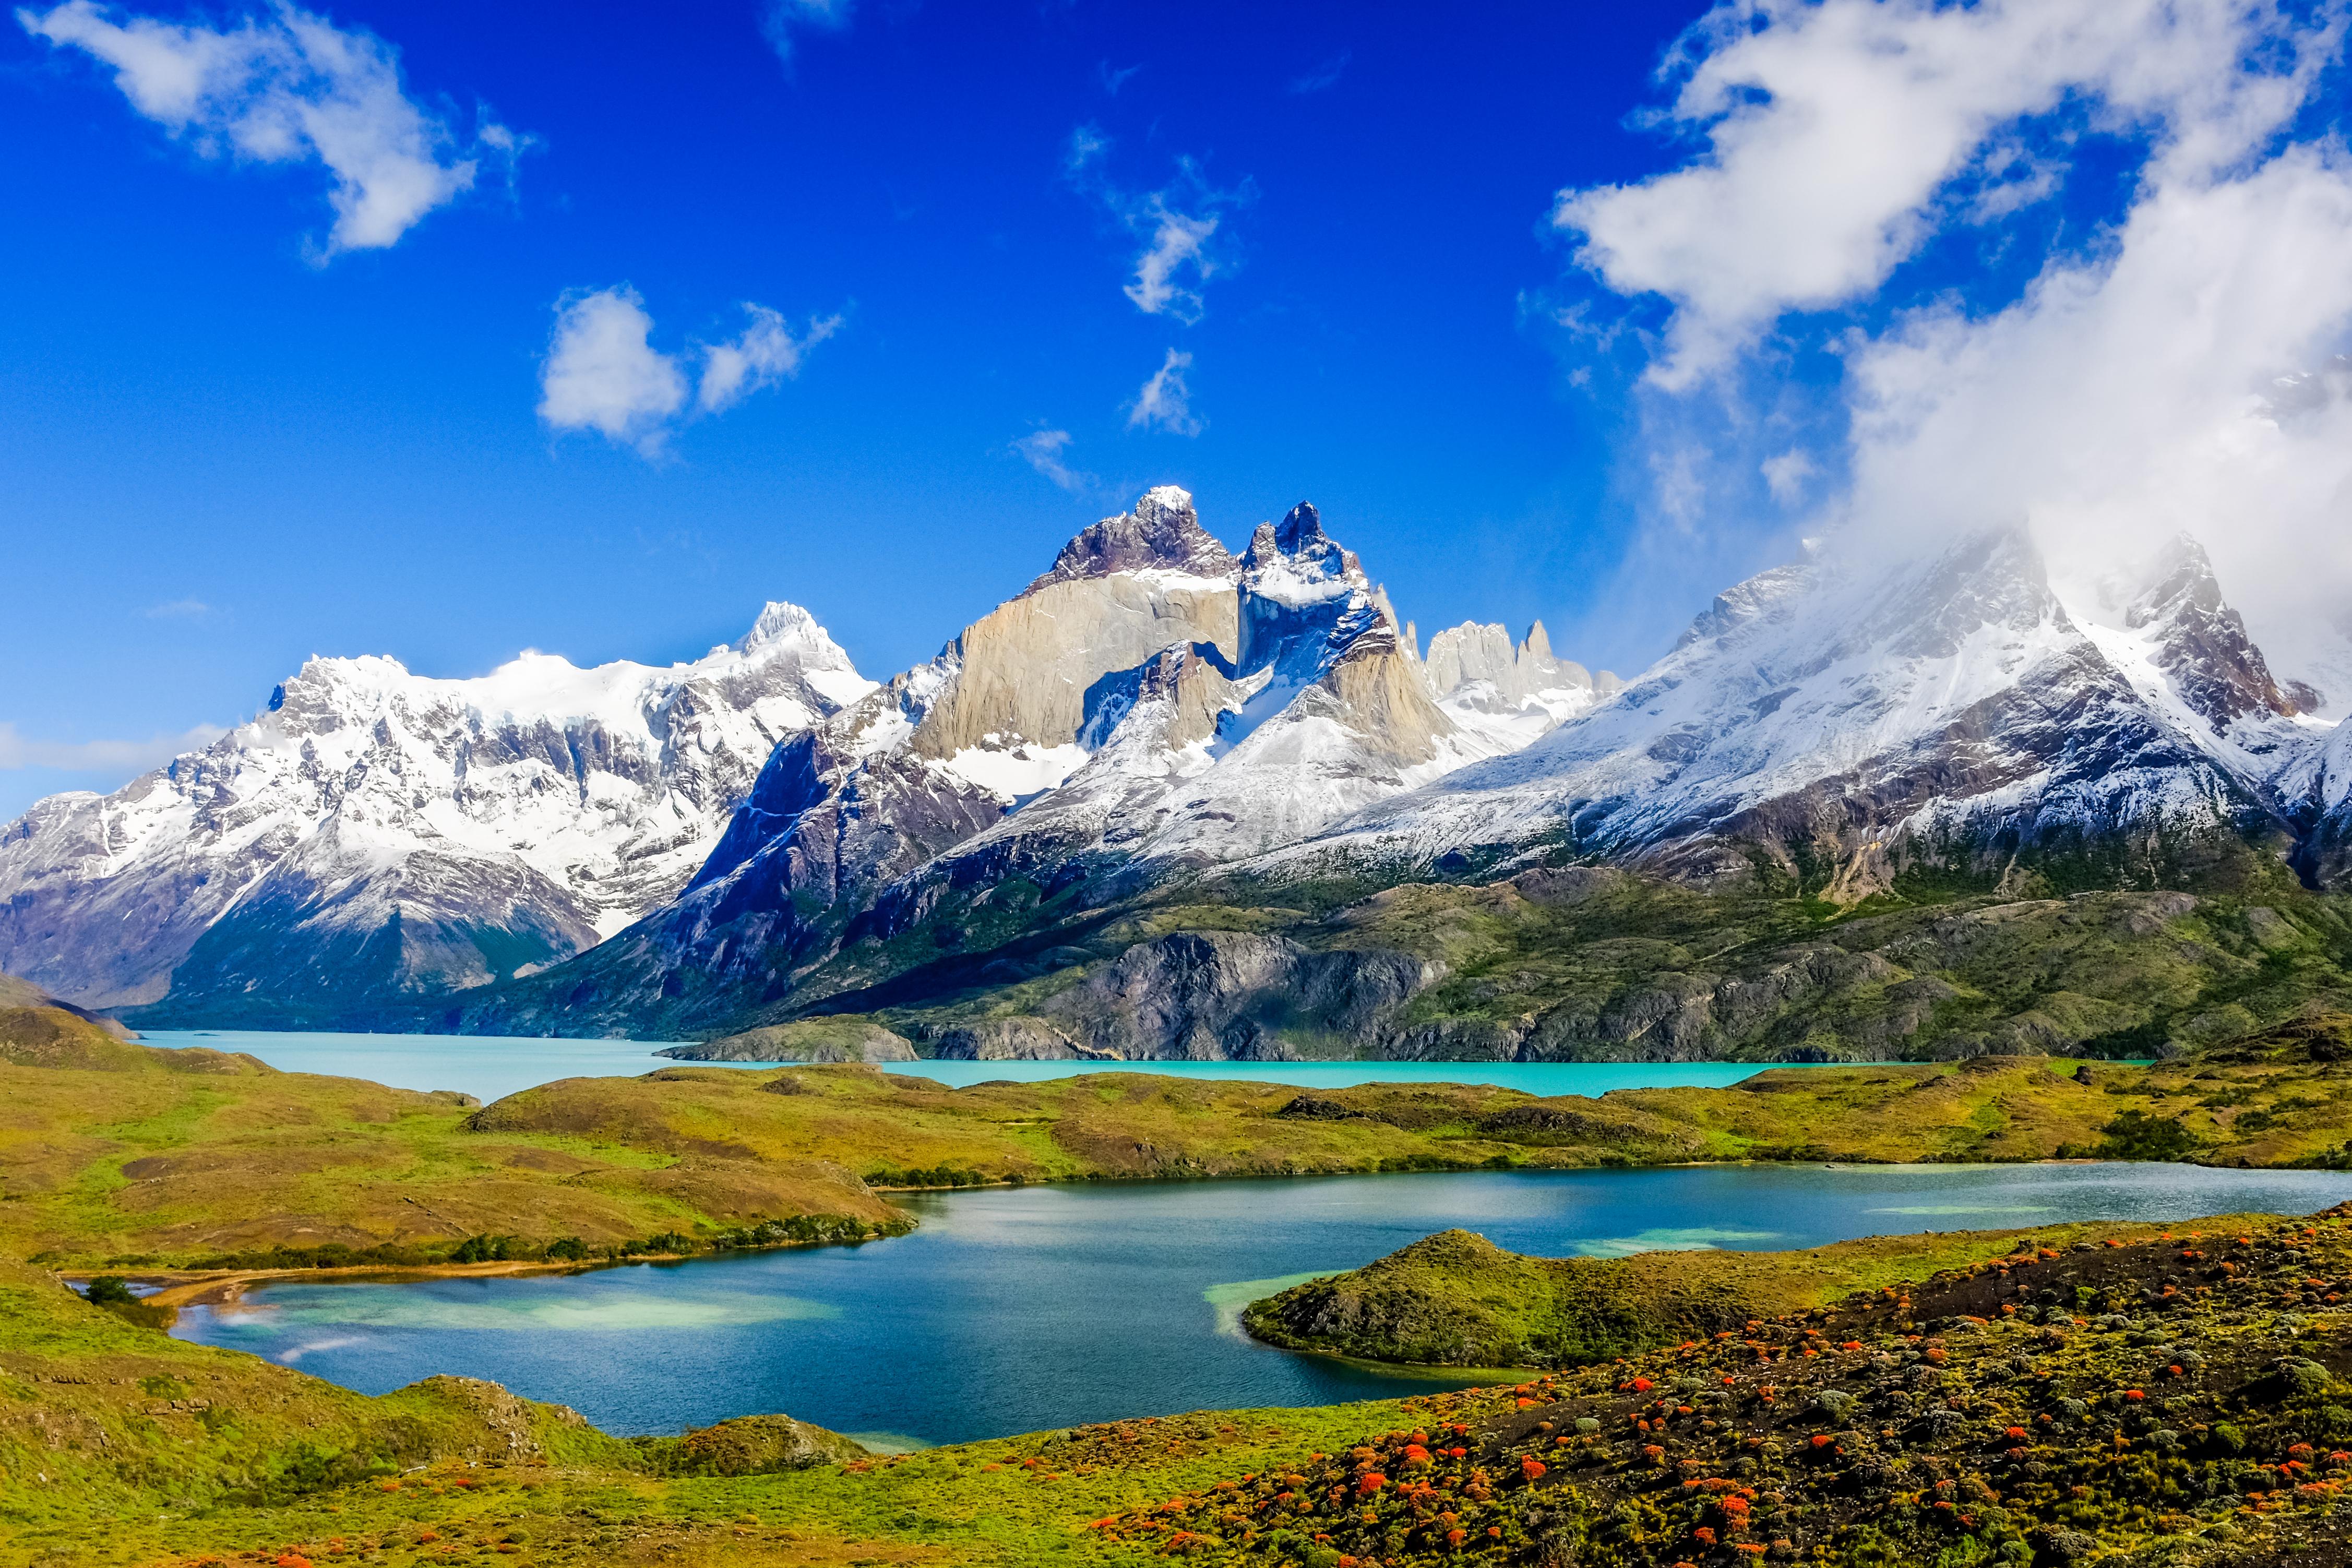 Cheap Flights to Patagonia from $645 - KAYAK